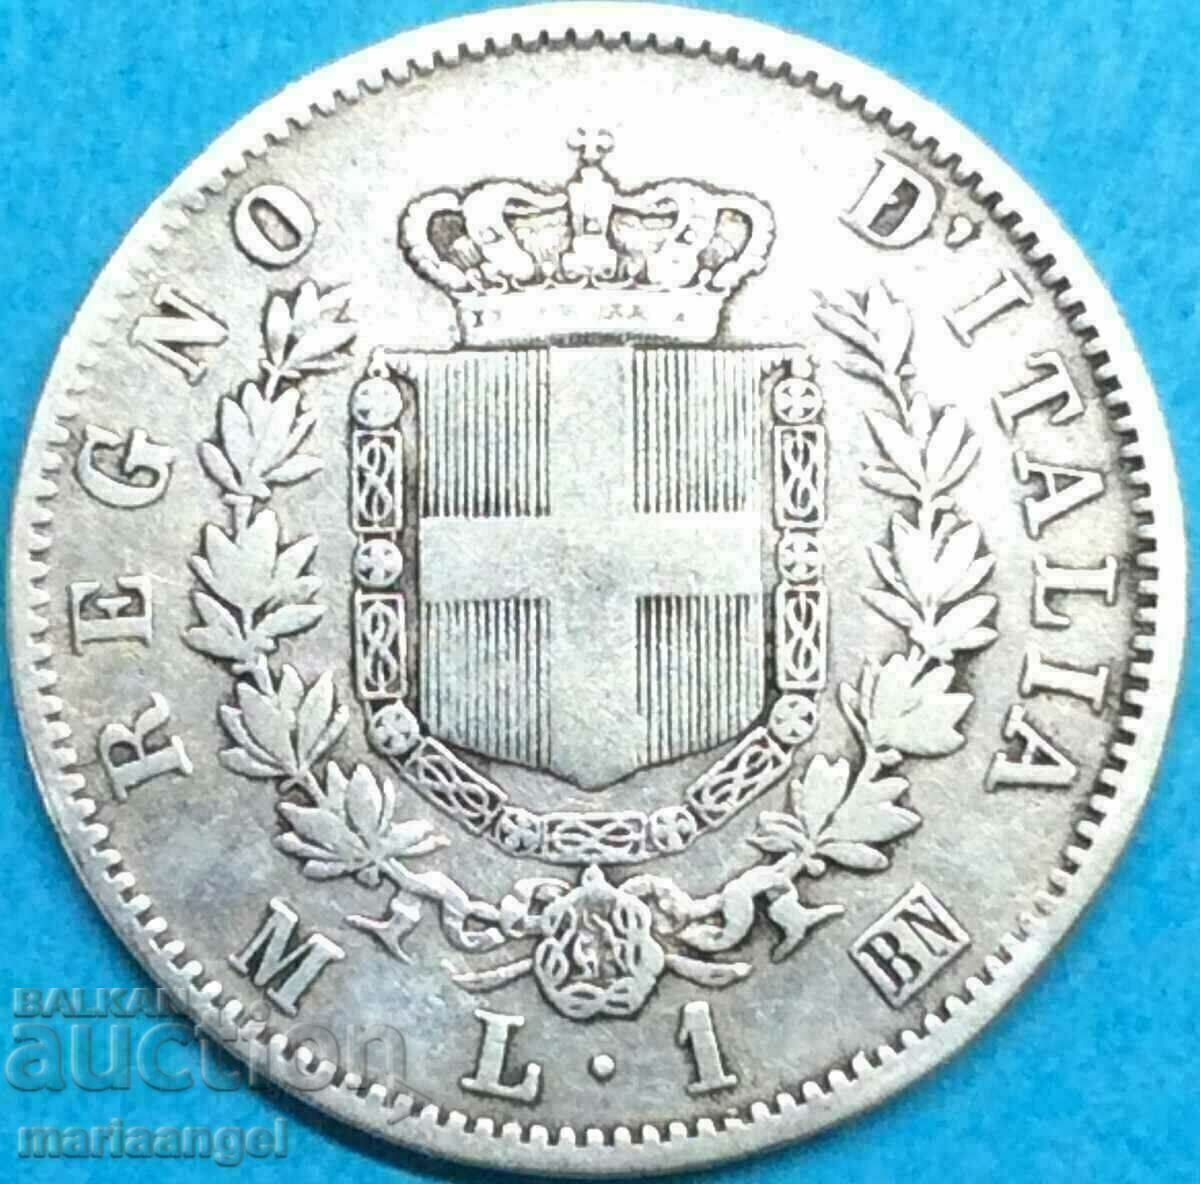 Italy 1 lira "Shield" 1863 M - Milan silver 2